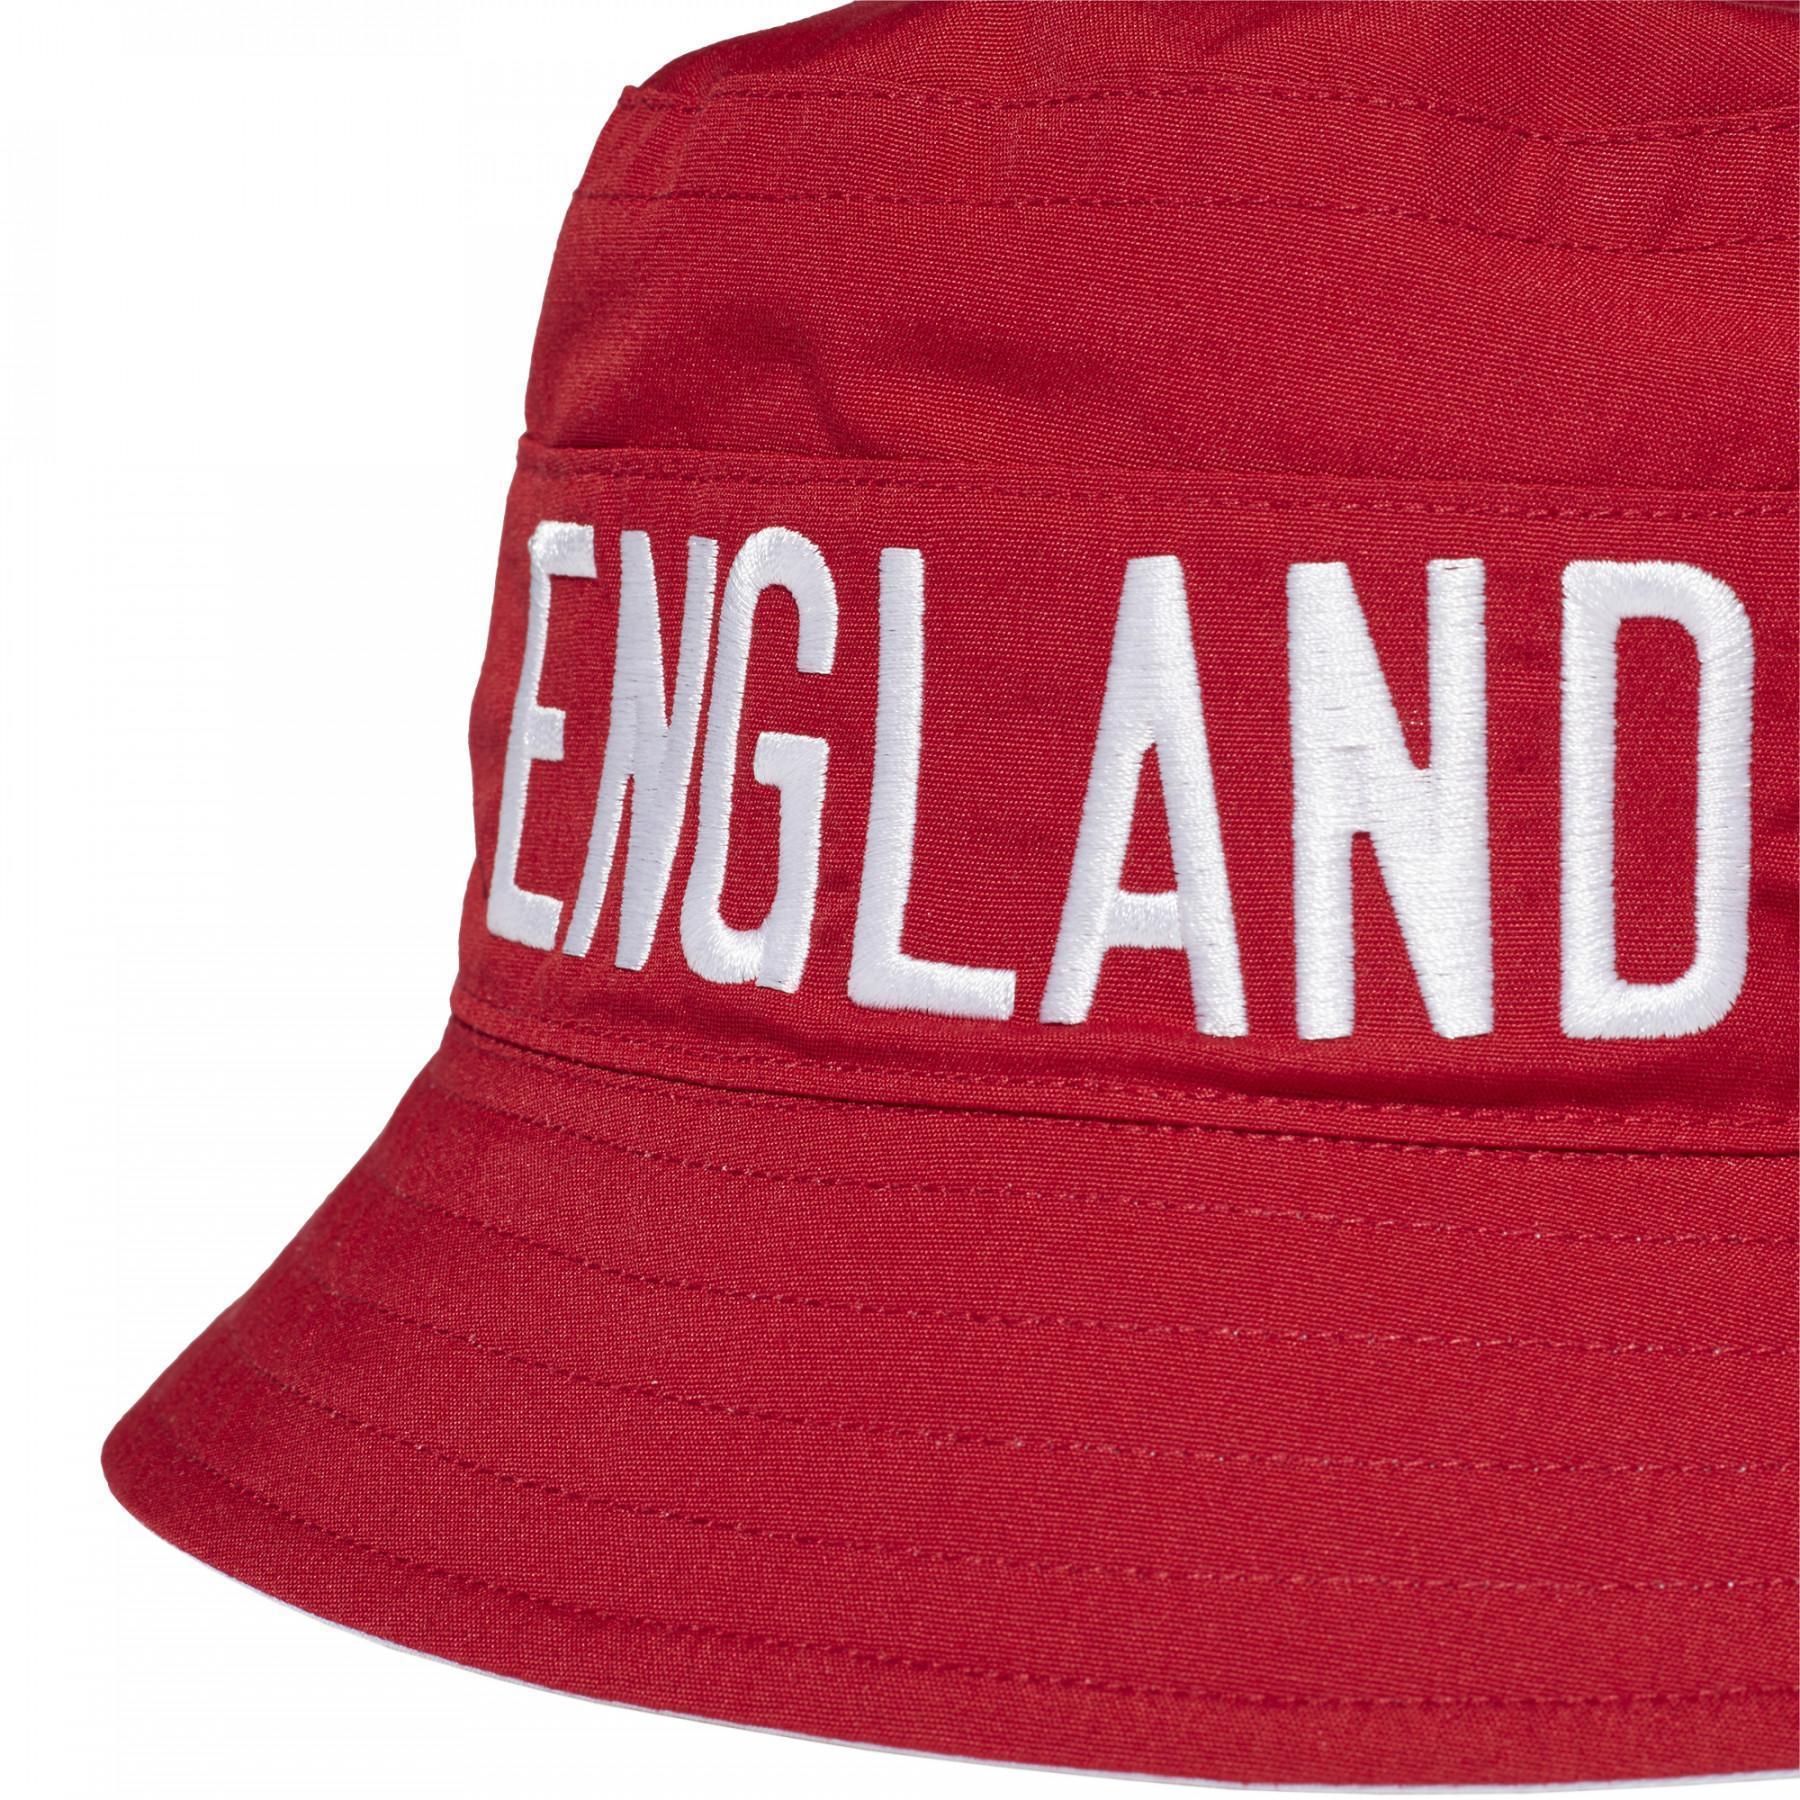 Odwracalna cewka adidas Angleterre Fan Euro 2020